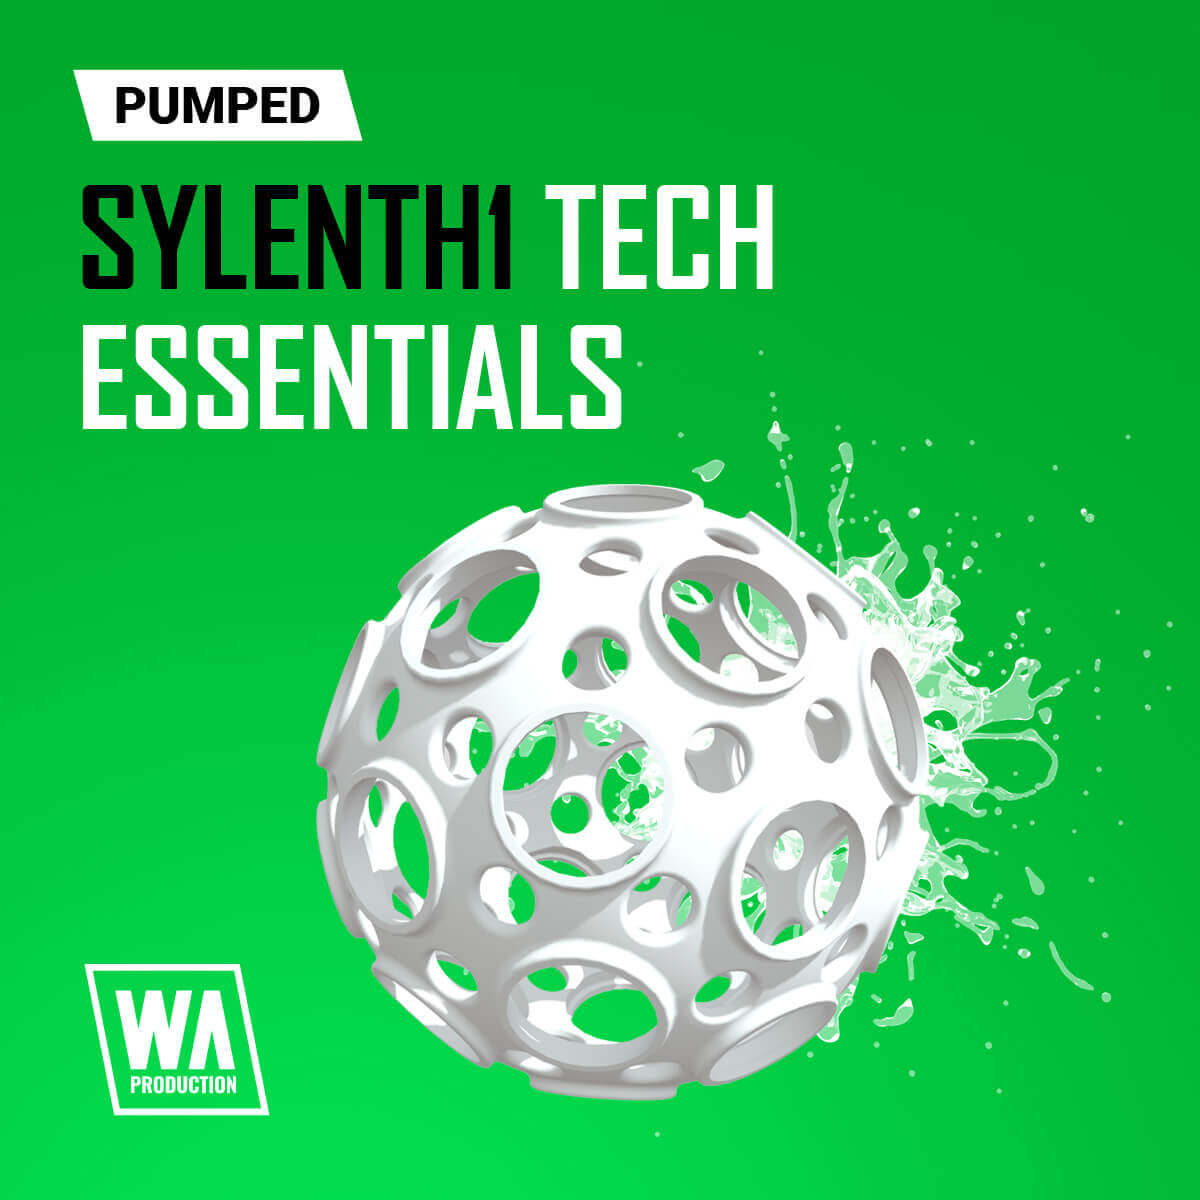 W.A. Production Pumped: Sylenth1 Tech Essentials